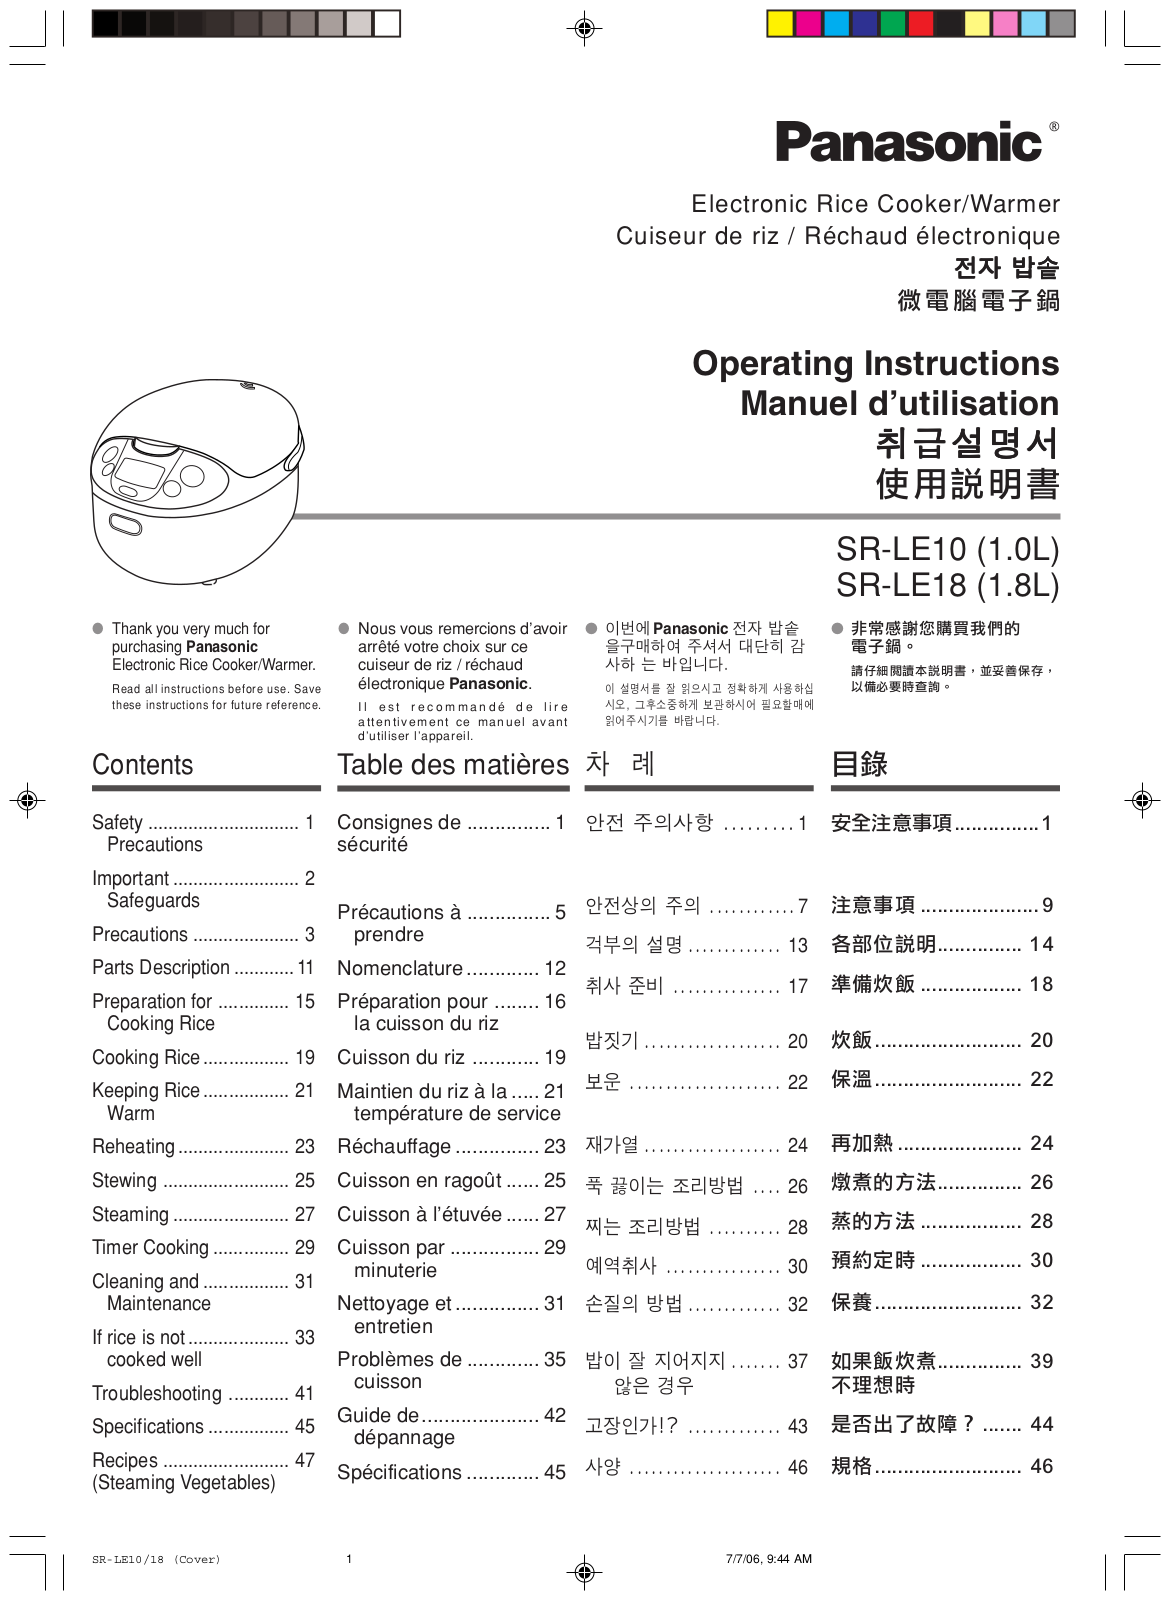 Panasonic Sr-le10, Sr-le18 Owner's Manual